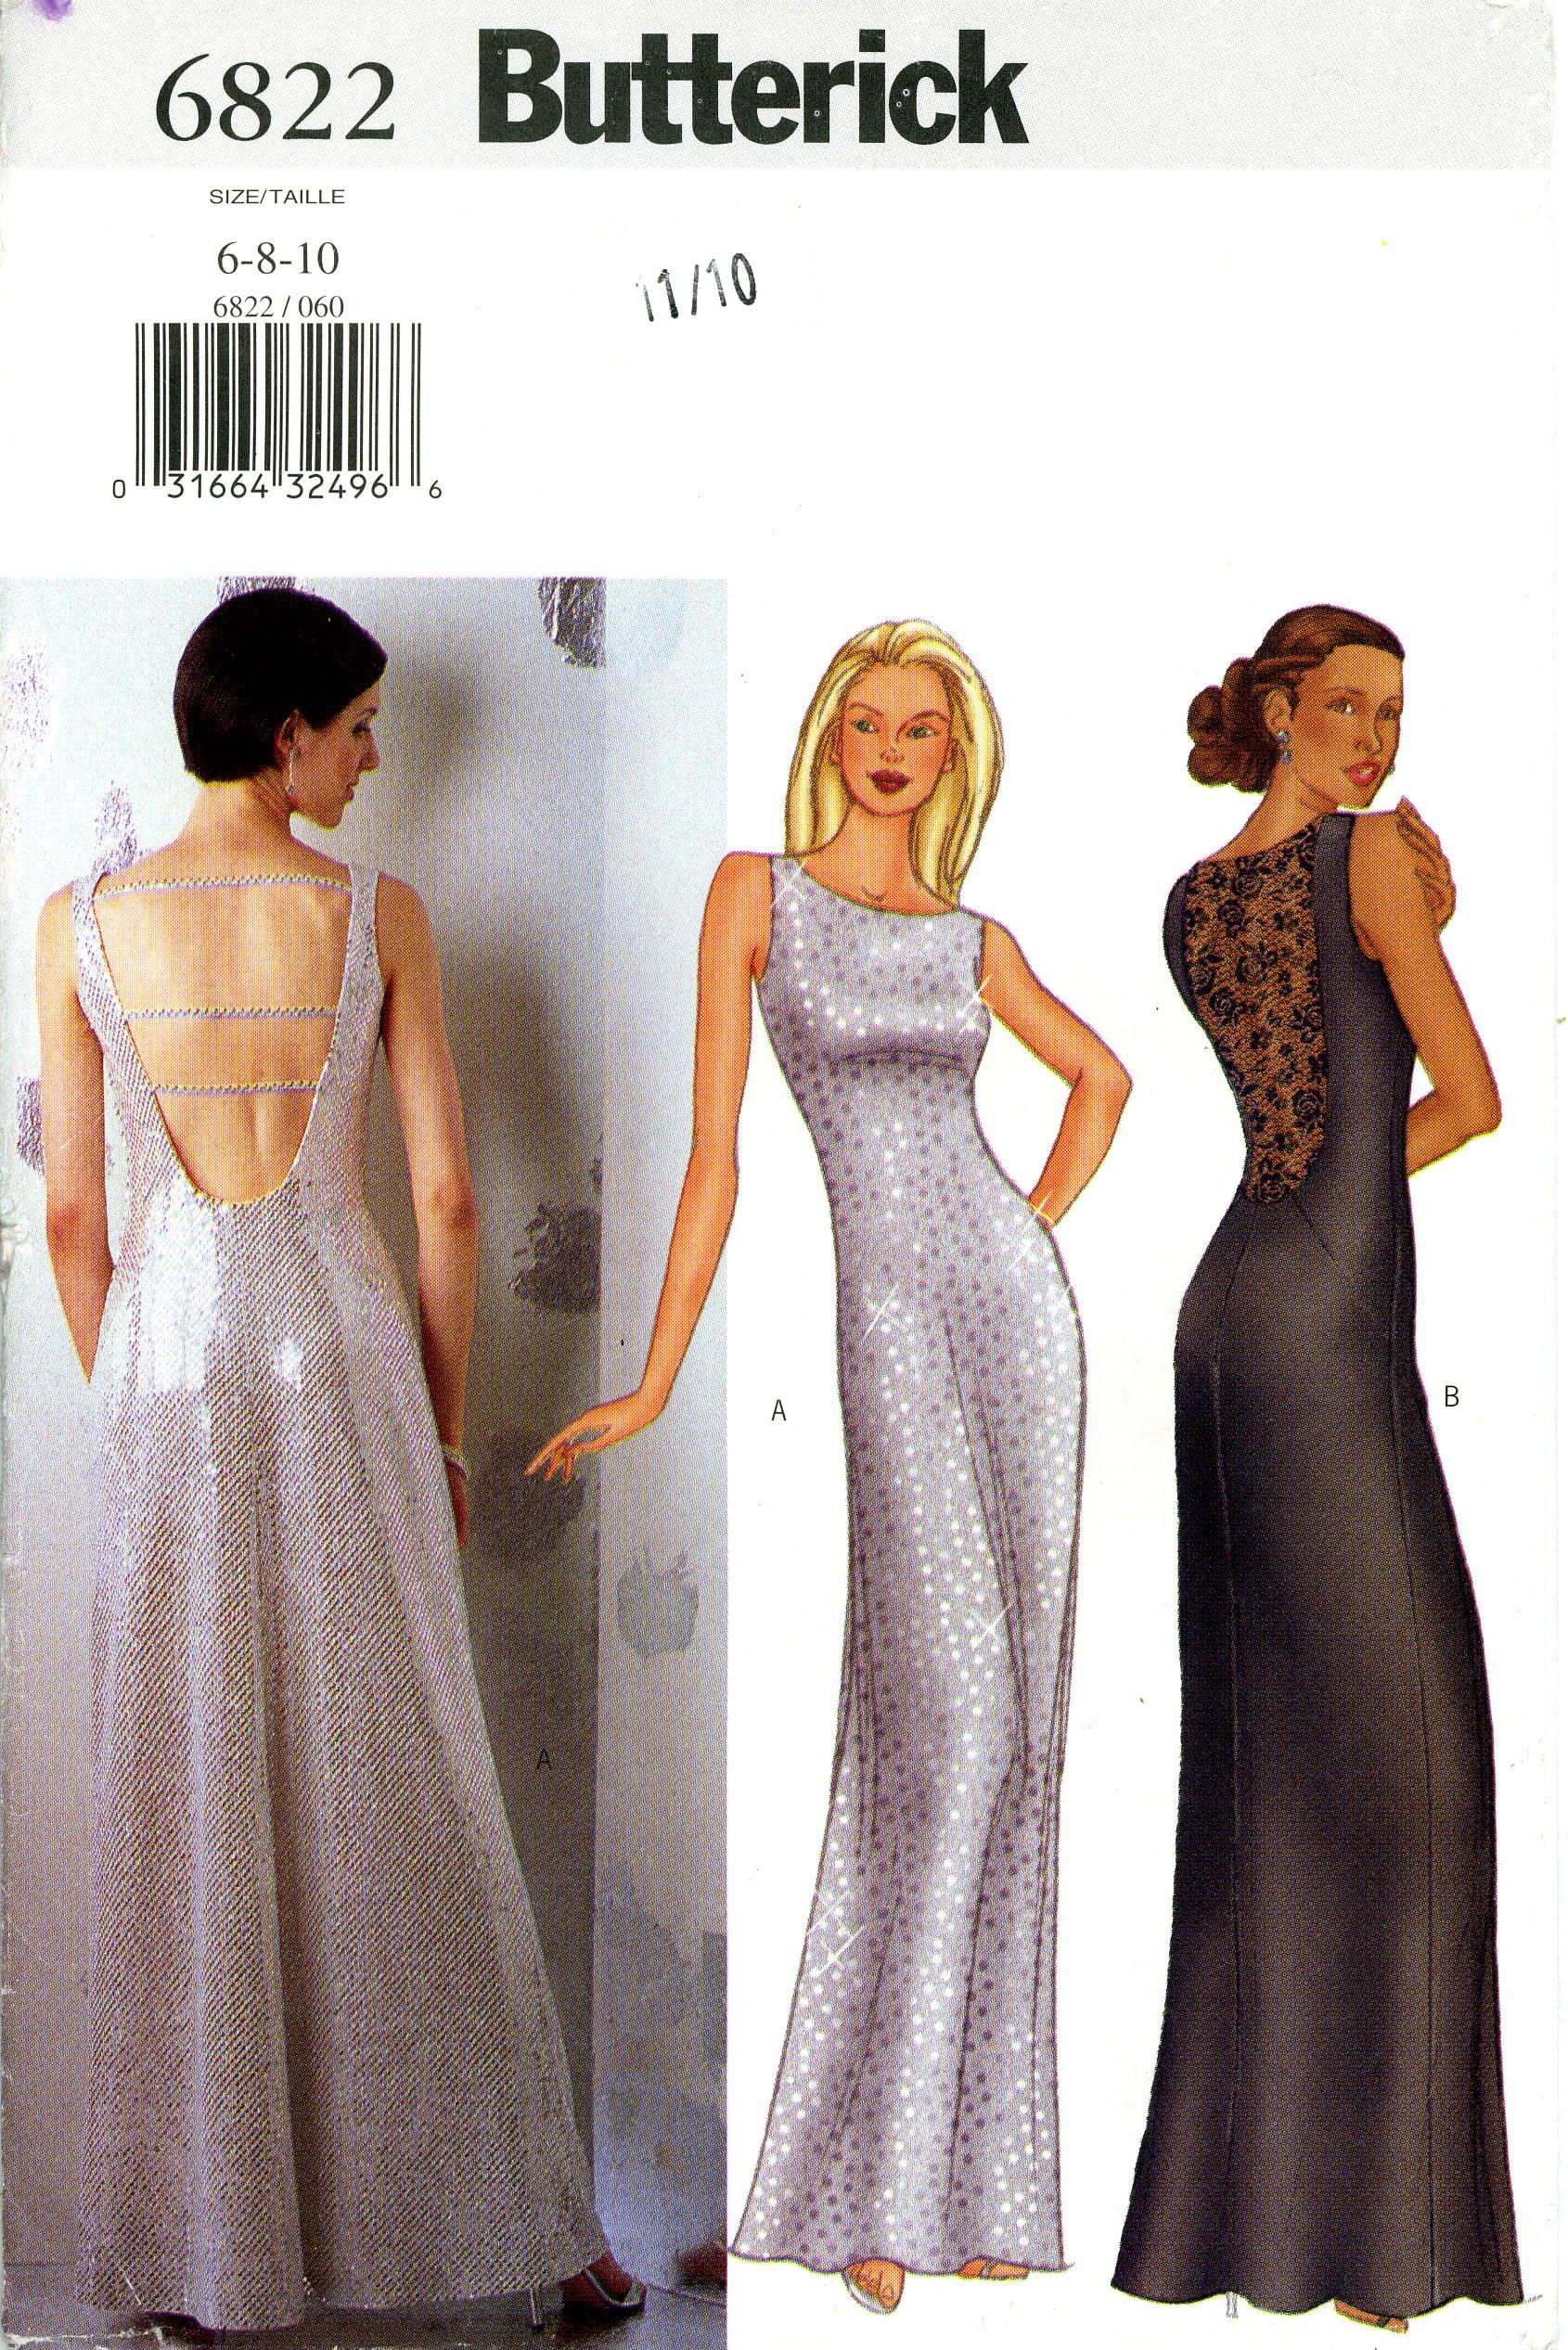 Prom Dress Sewing Patterns Butterick Prom Evening Dress Pattern Patterns 1970s Pinterest